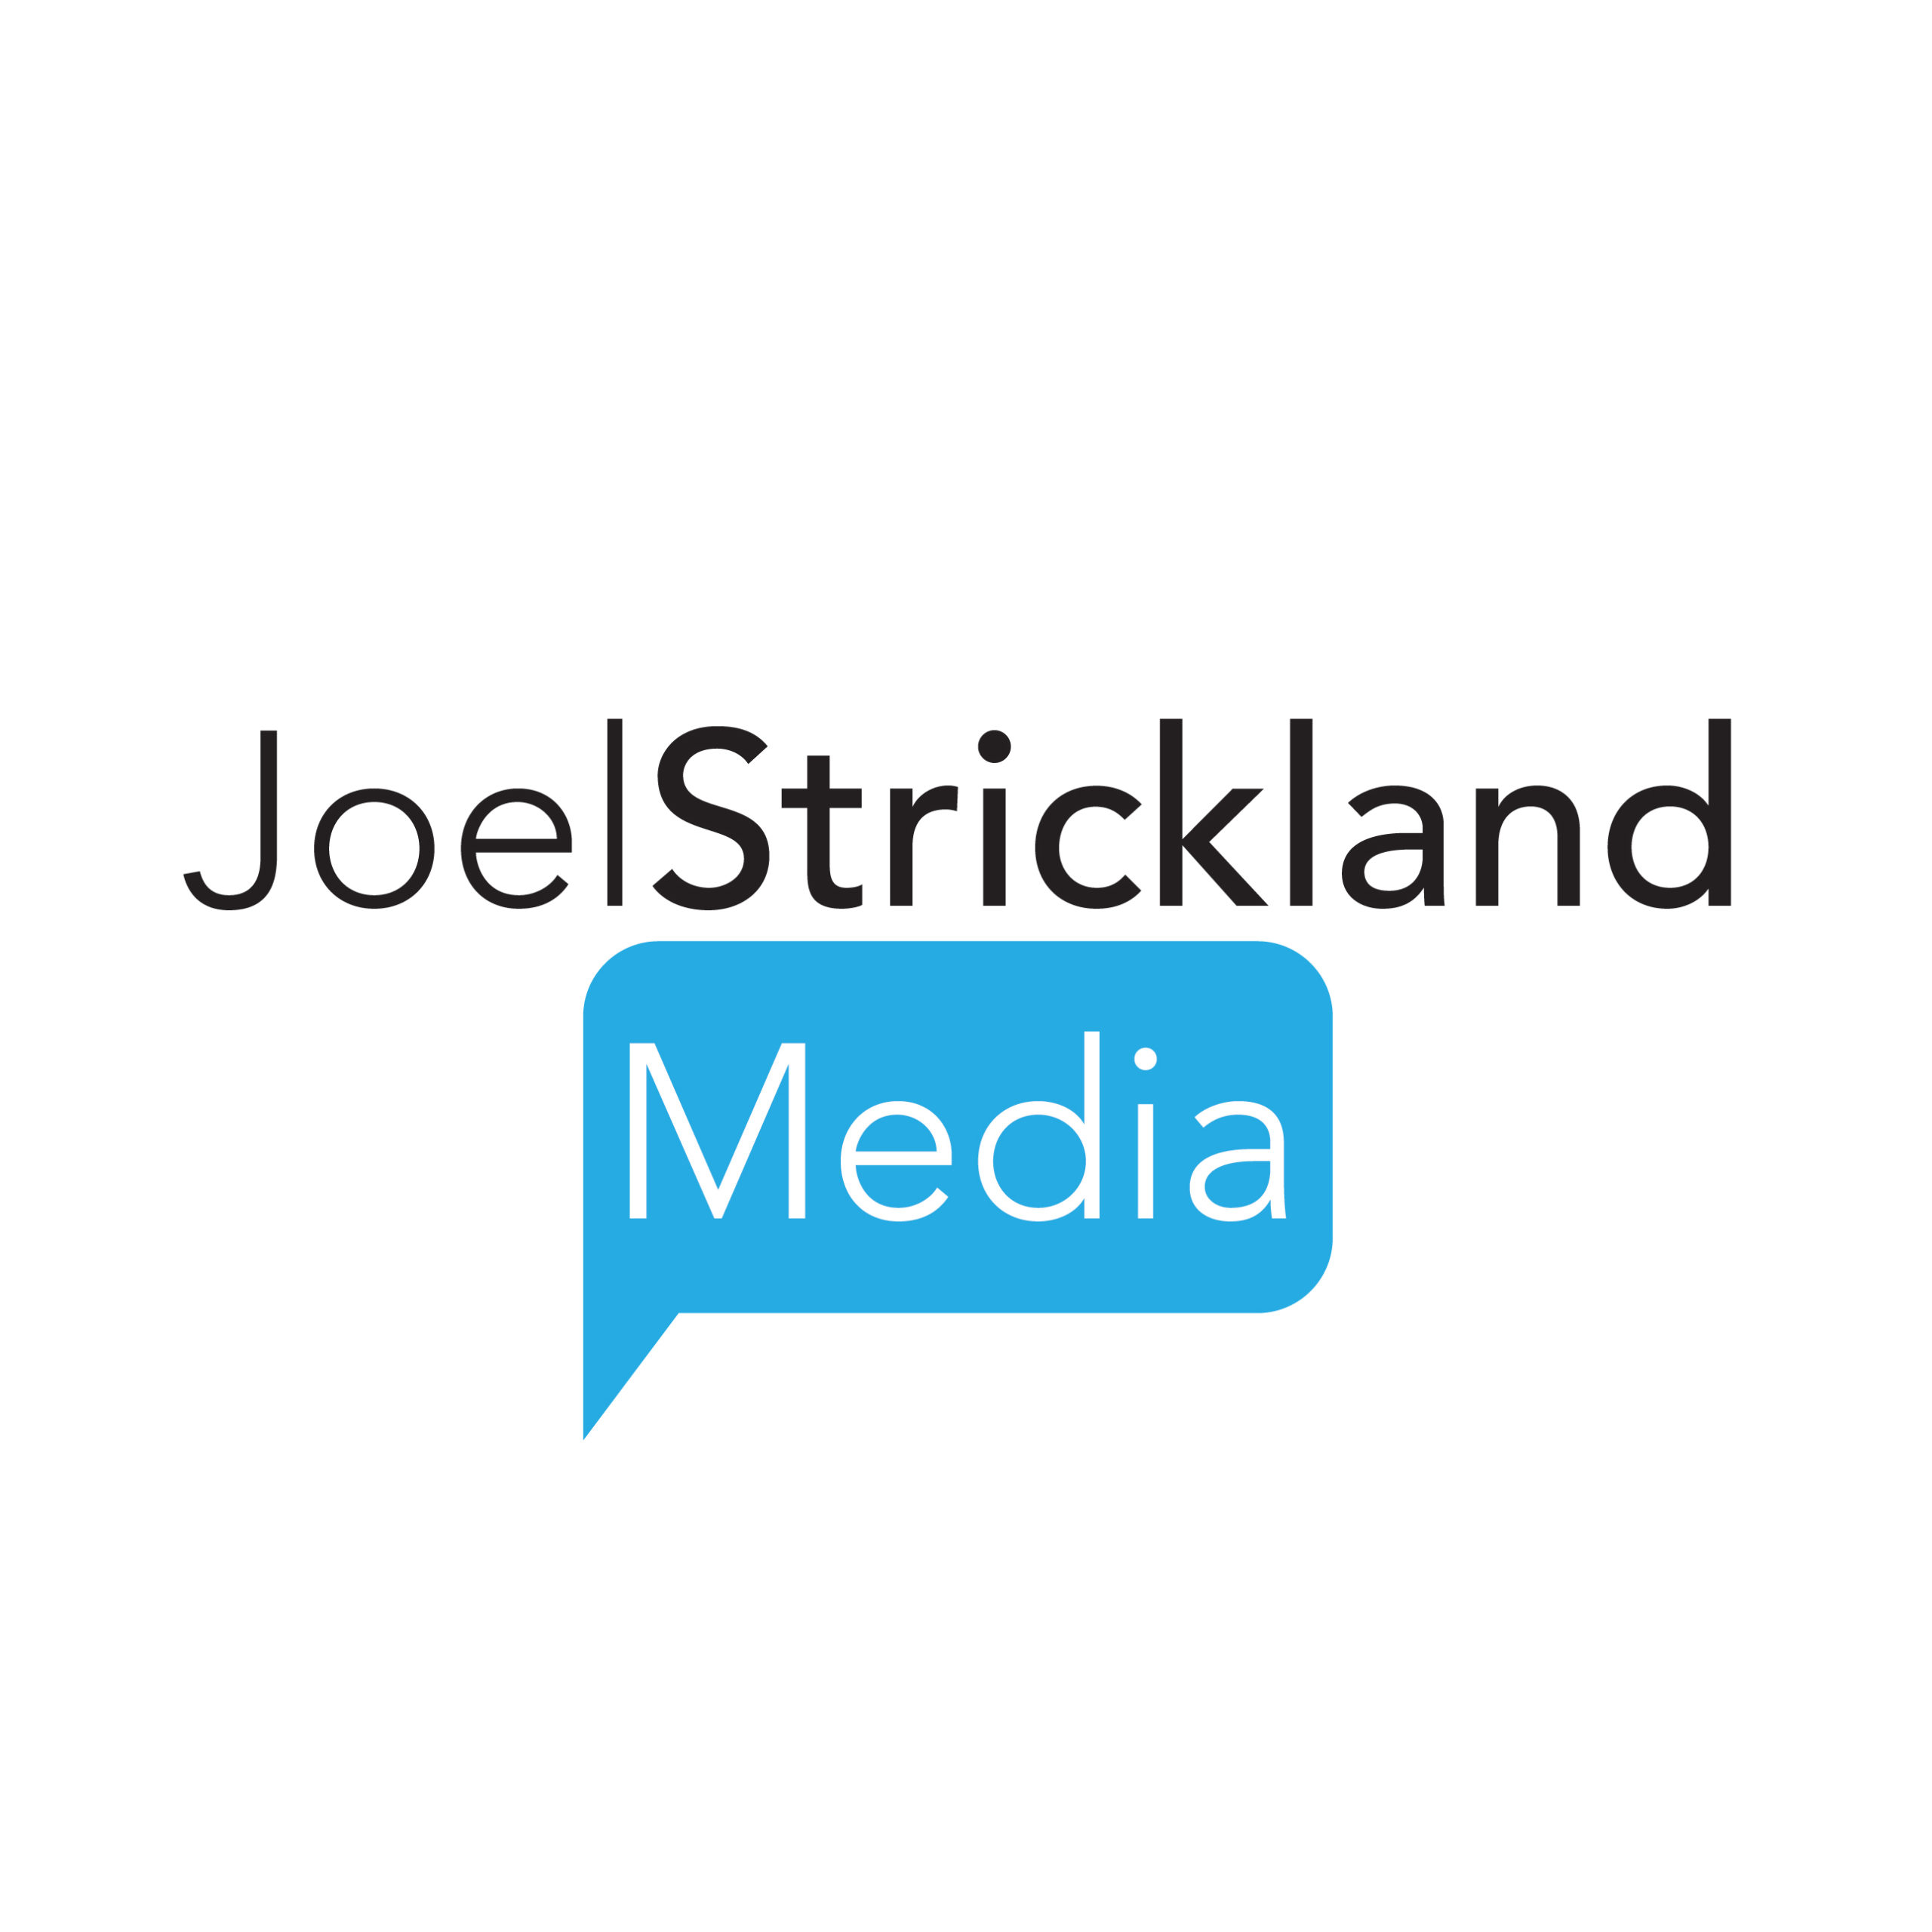 Joel Strickland Media